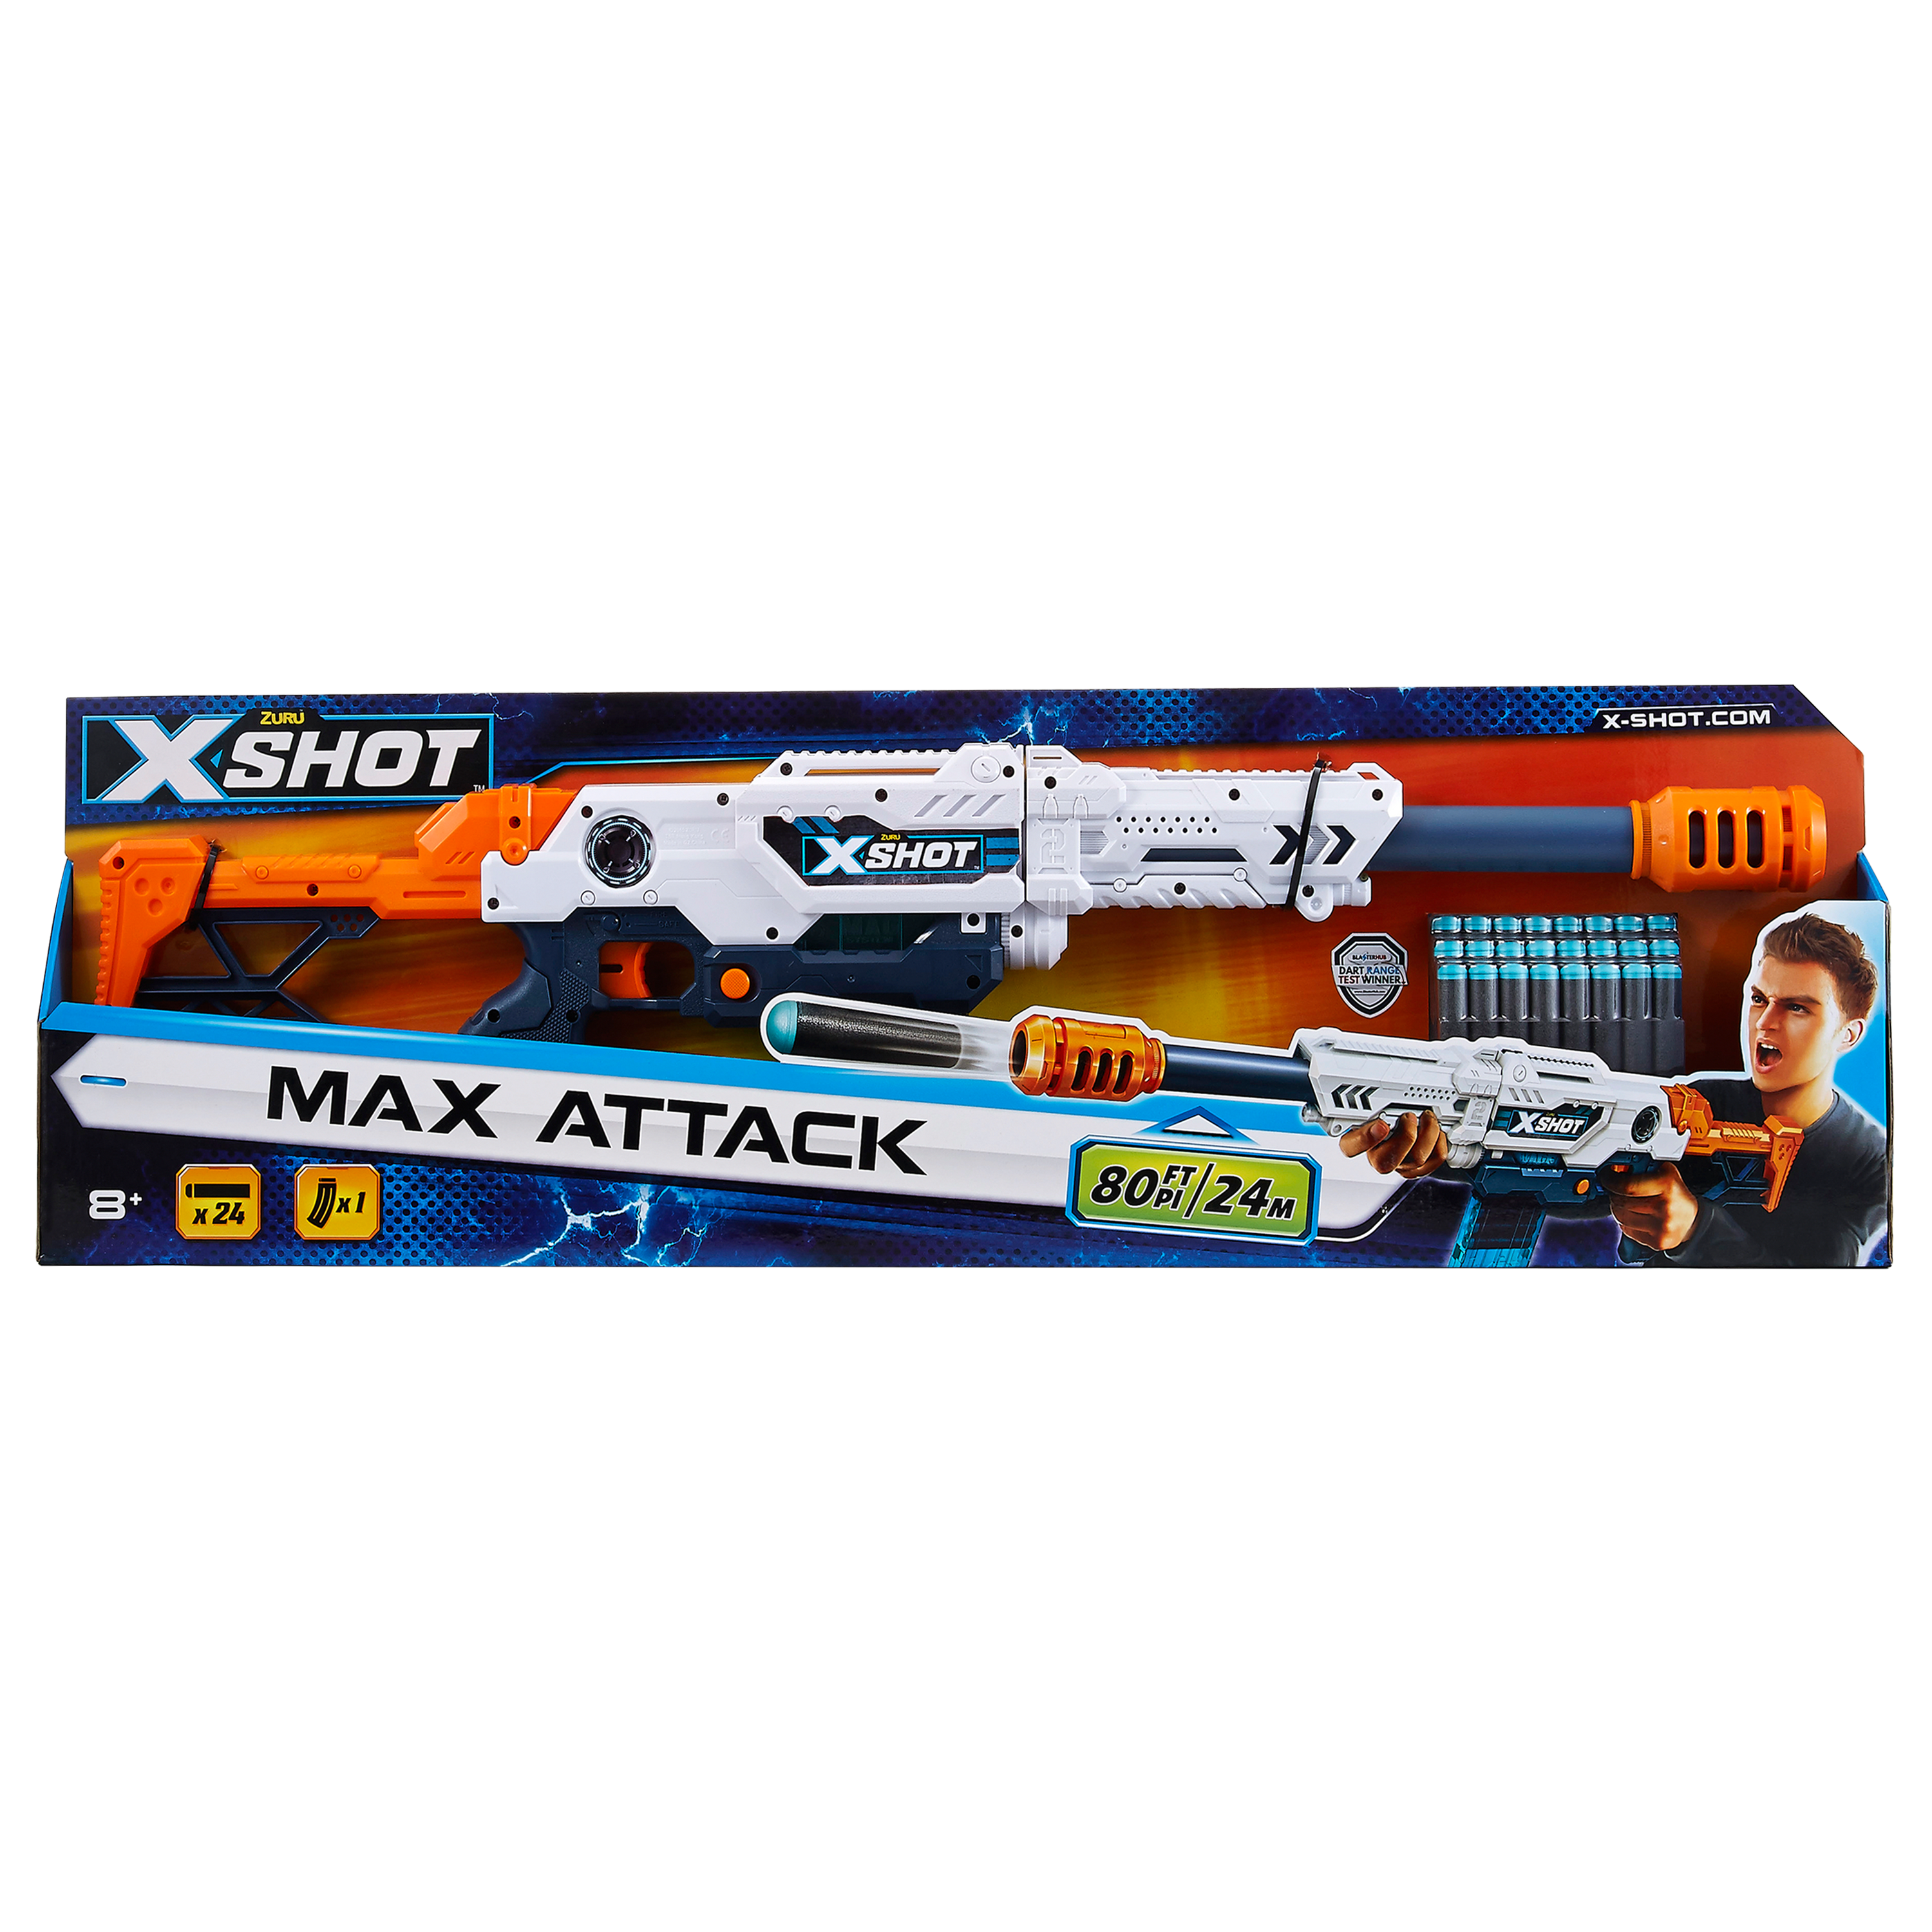 X-shot max attack - X-SHOT